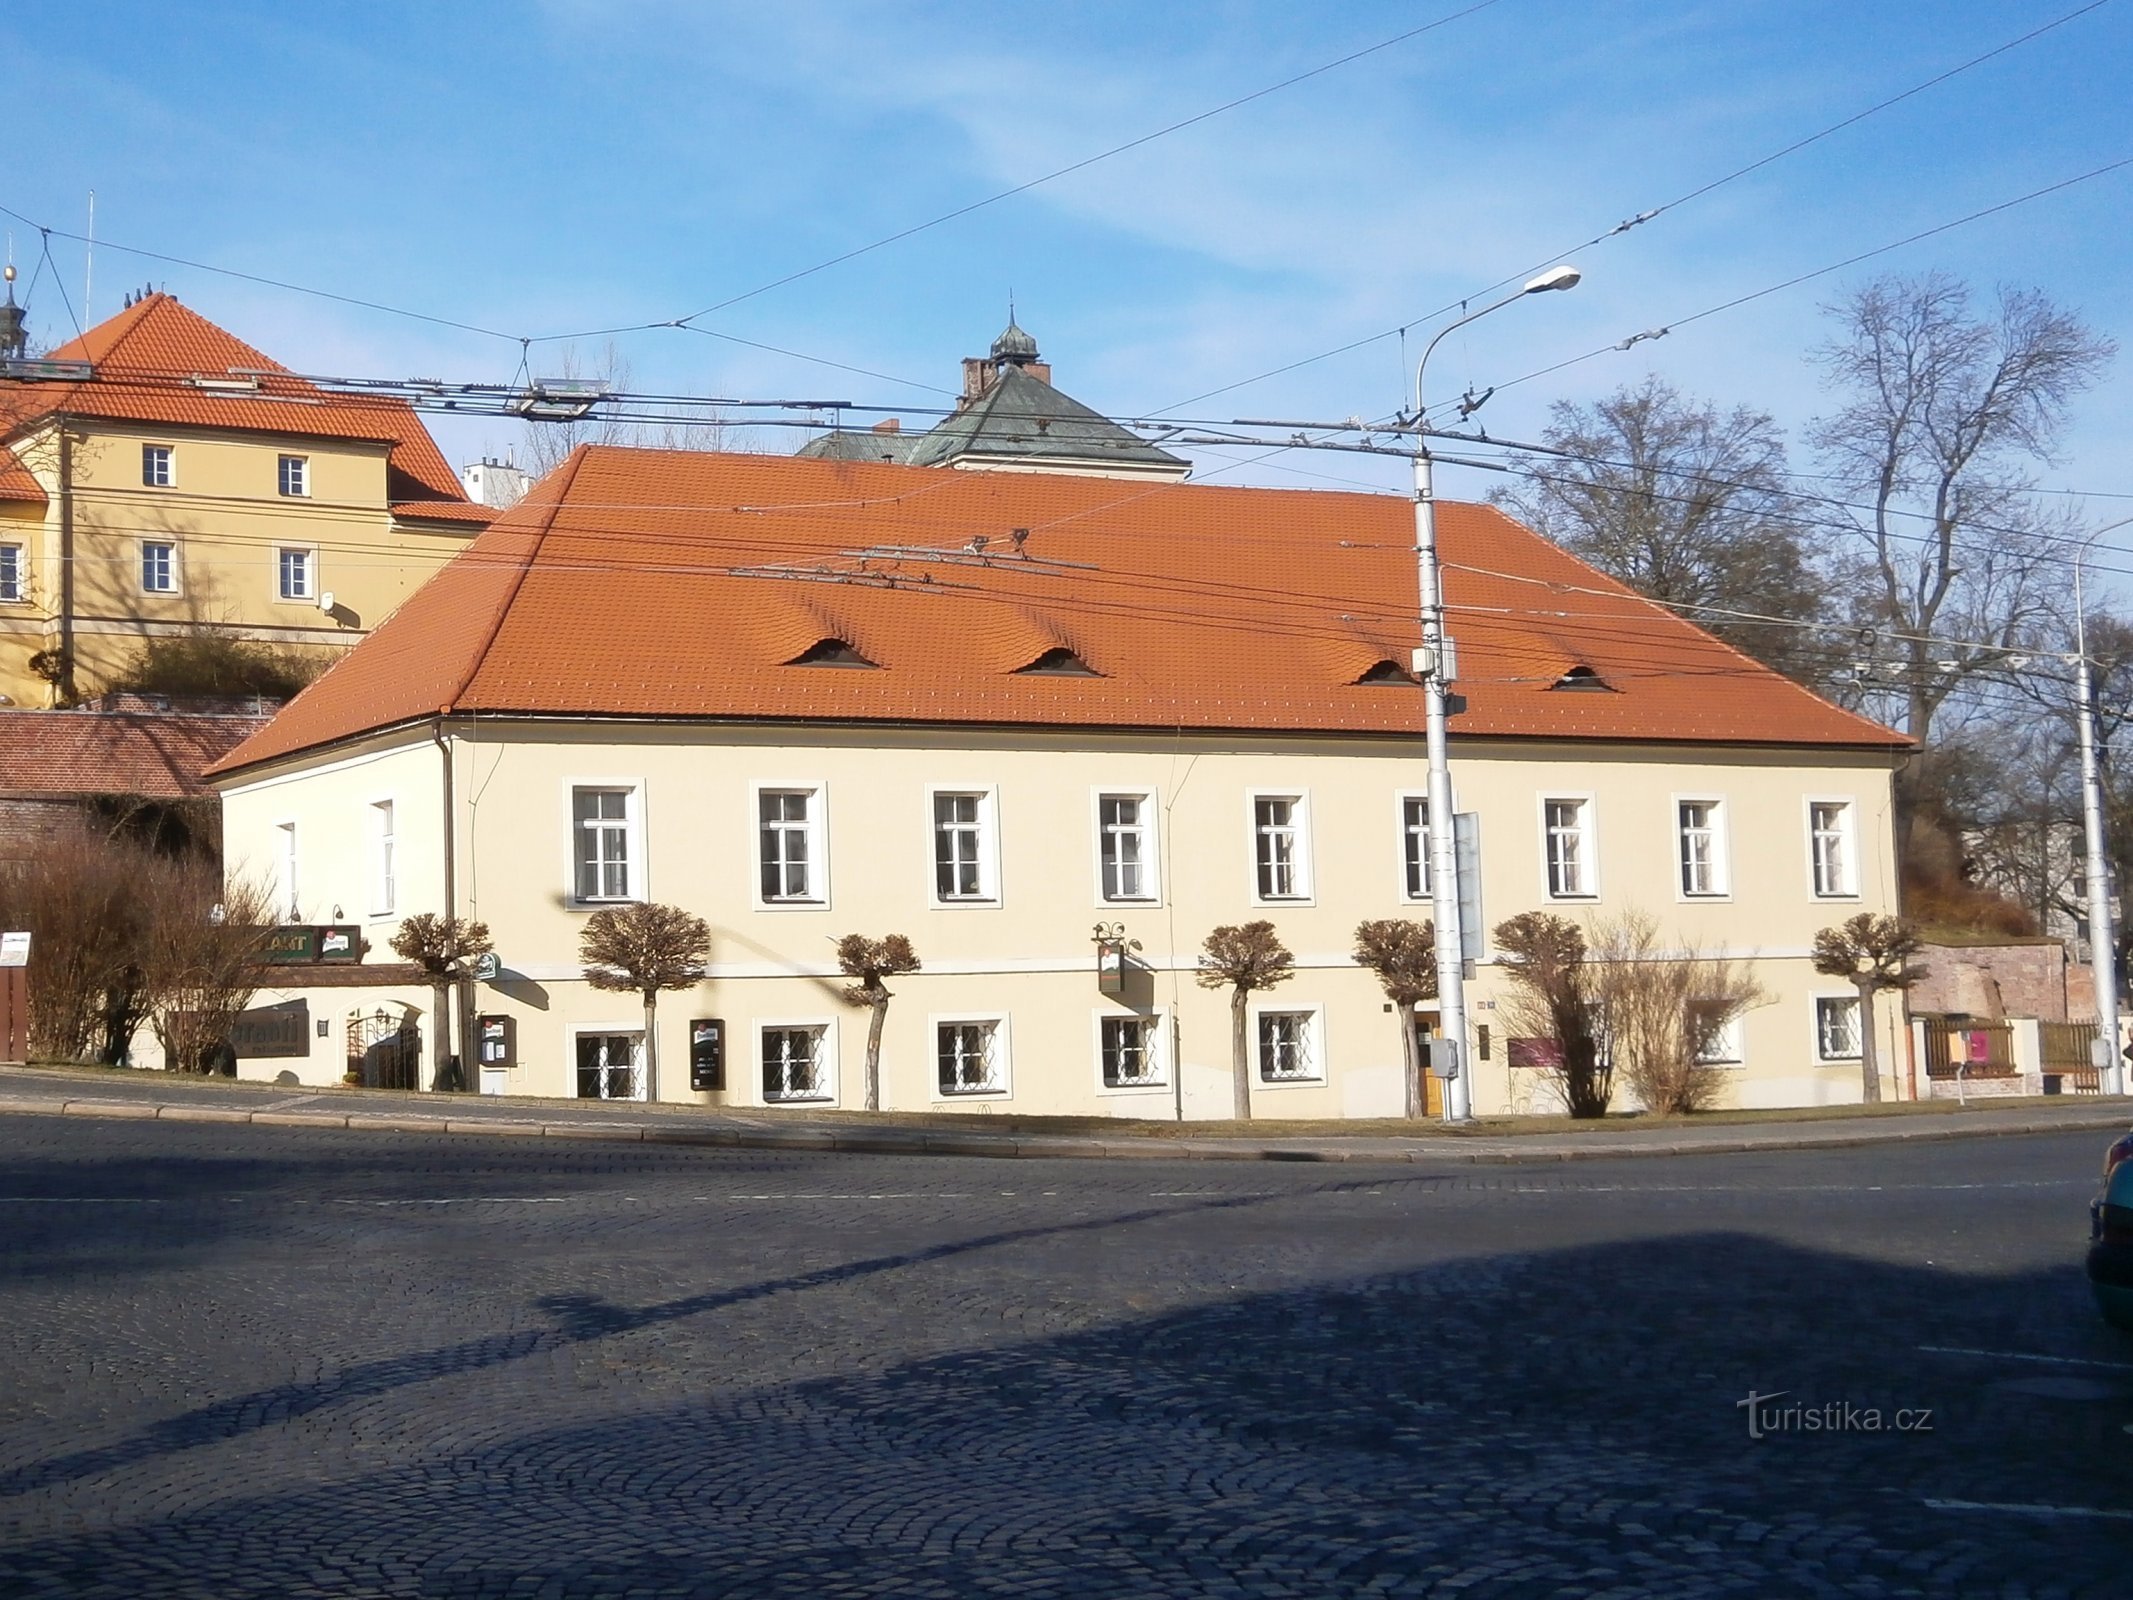 Engineering Directorate (Hradec Králové, 8.2.2014 July XNUMX)